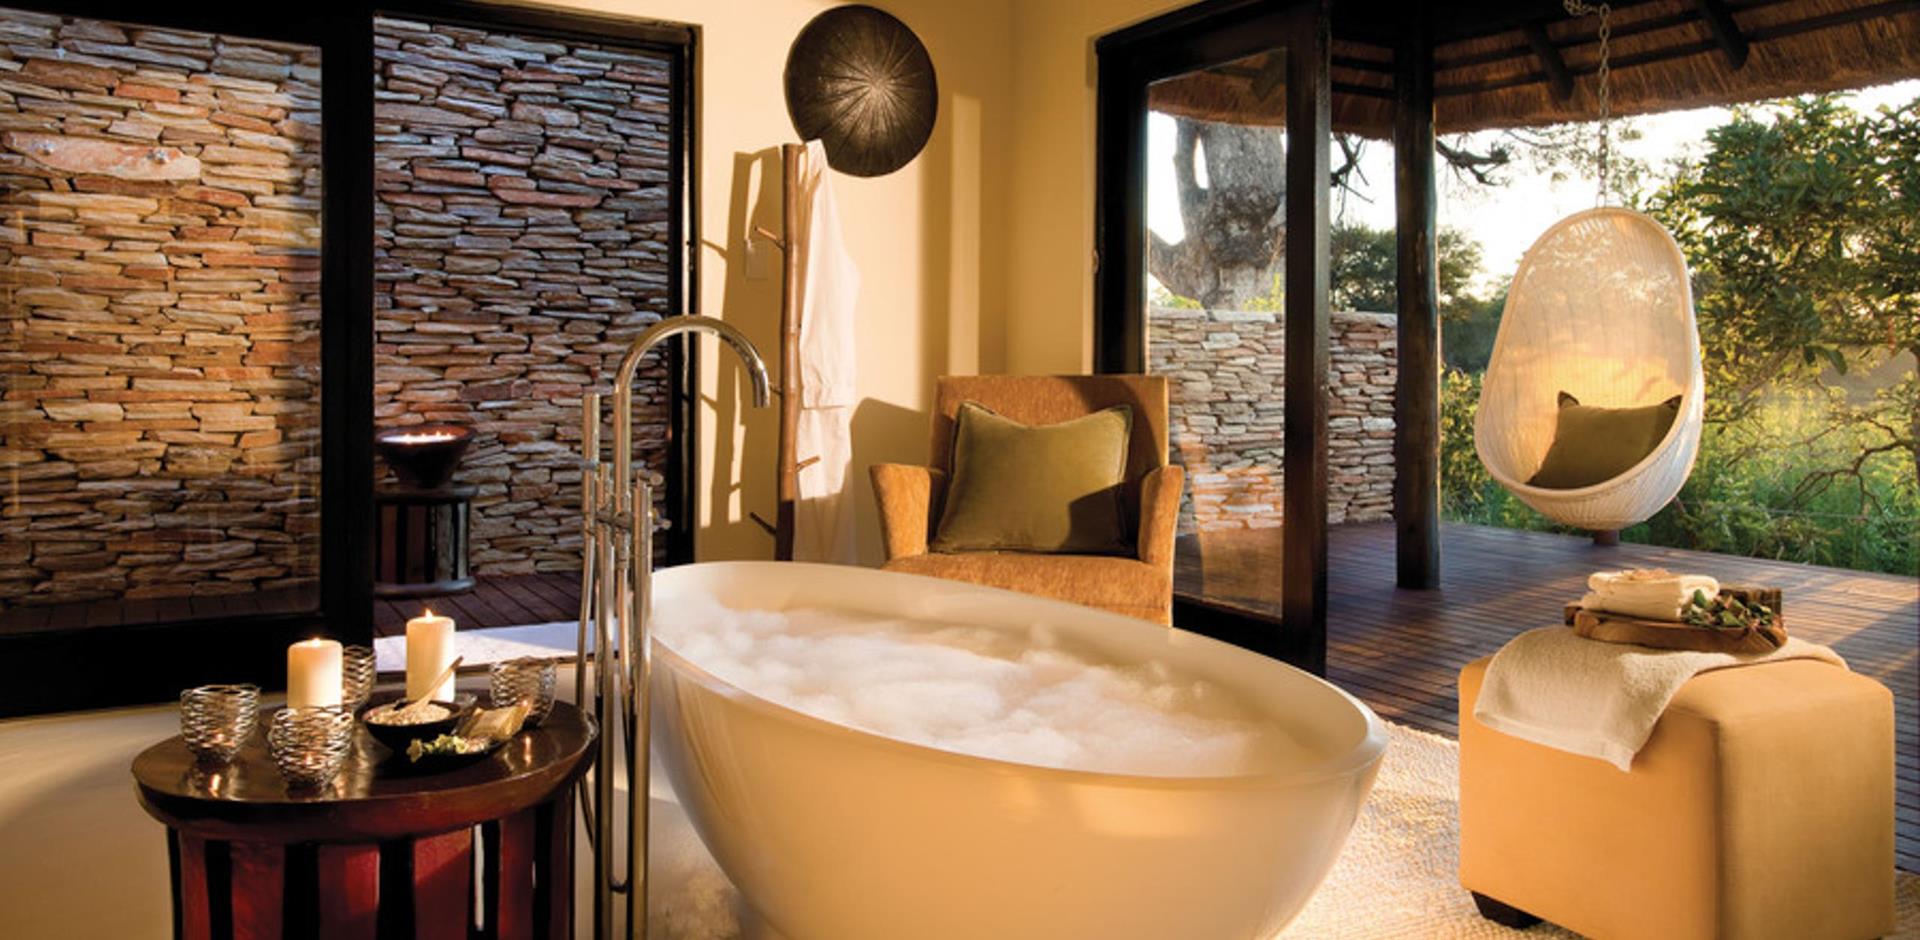 Bathroom, Lion Sands River Lodge, South Africa, A&K